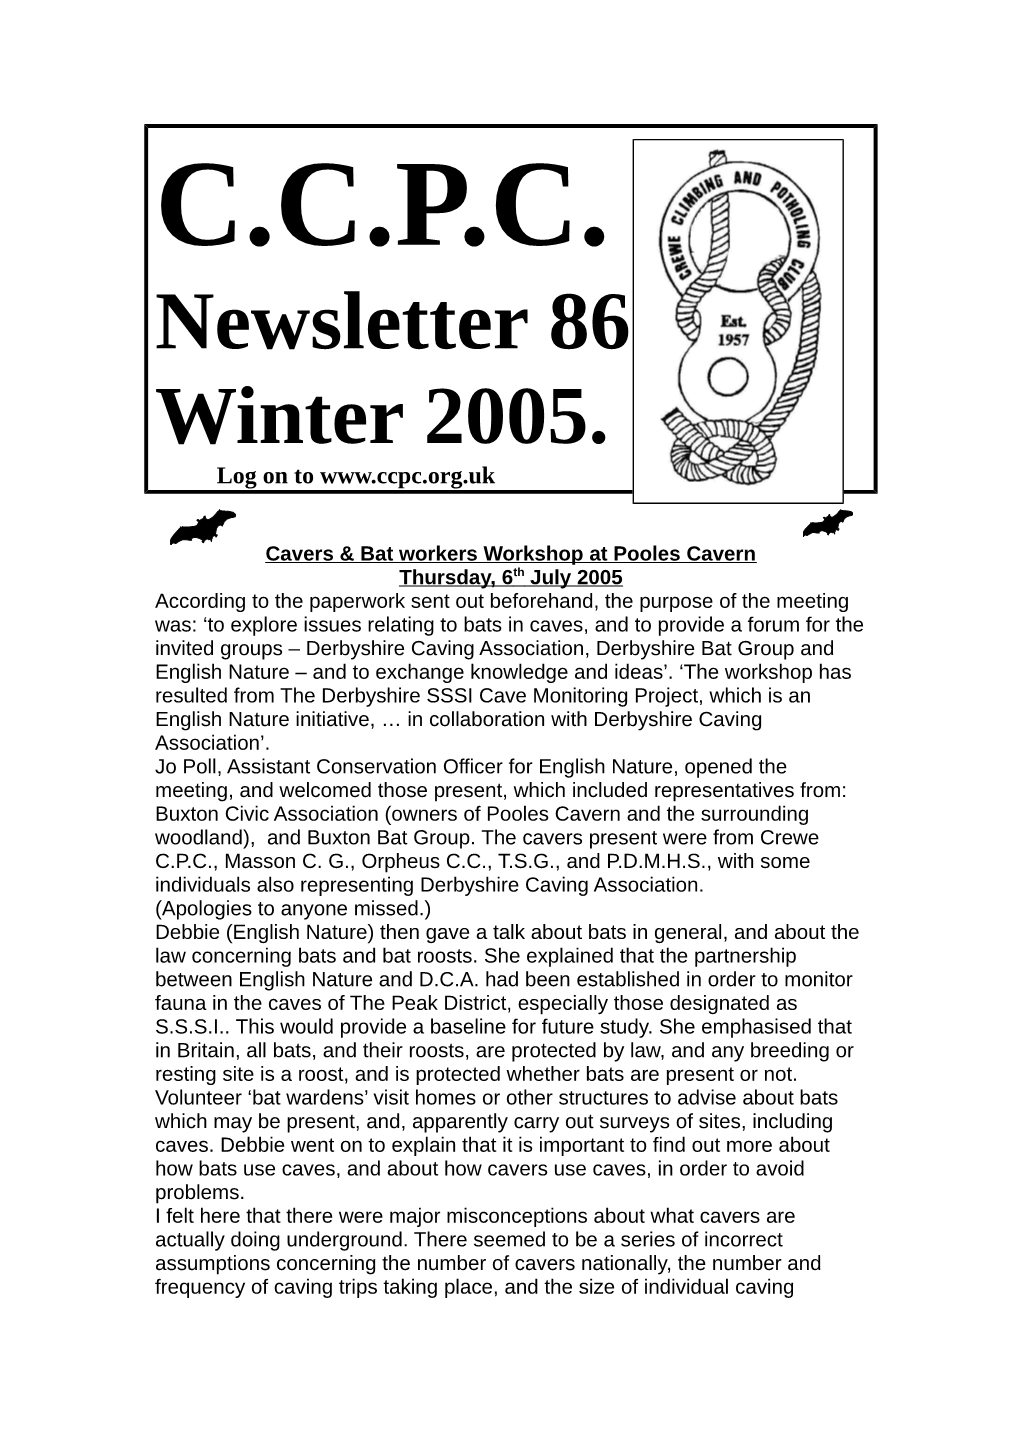 Newsletter 86. Winter 2005. Log on To